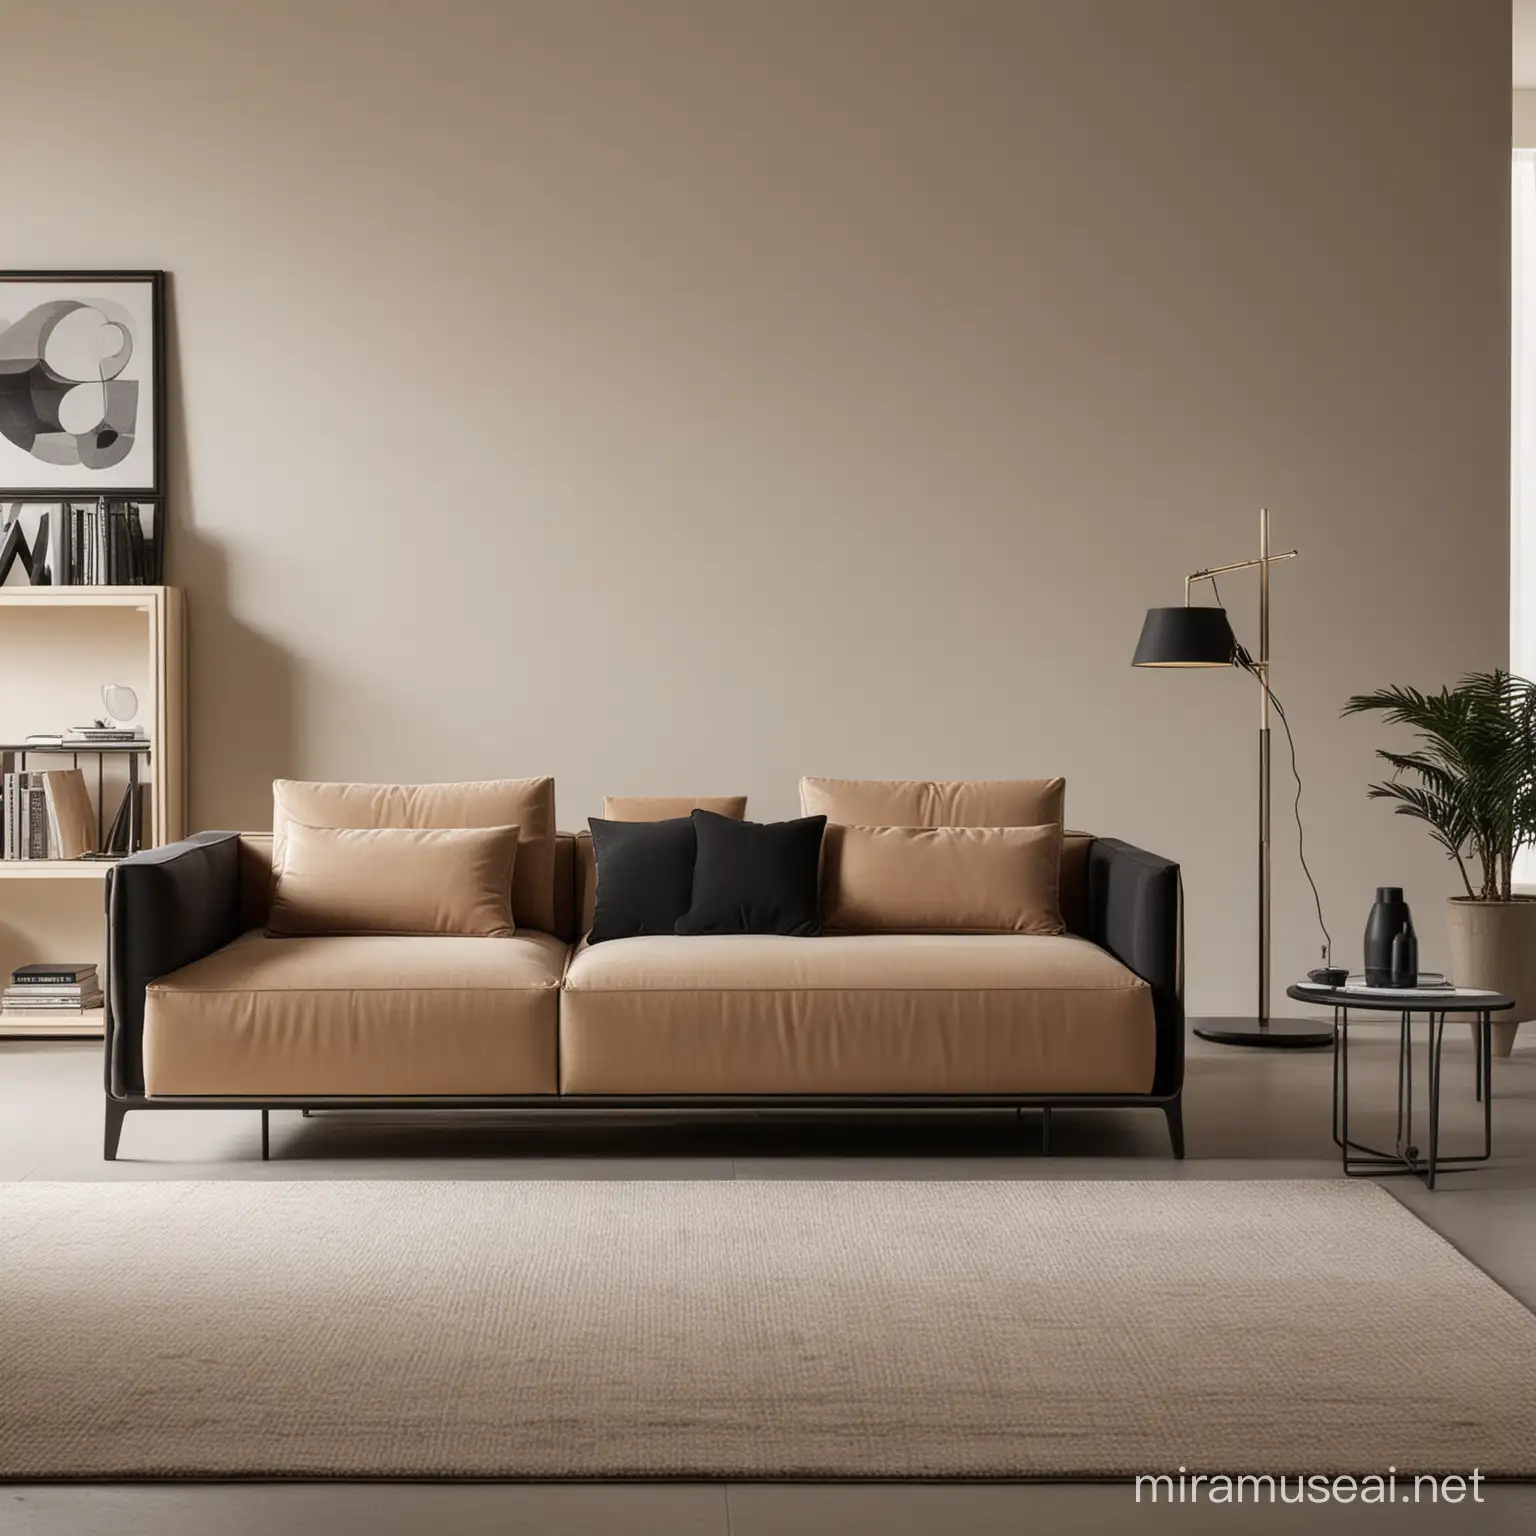 Luxury Italian Style 4Seat Modular Sofa with Multipurpose Design